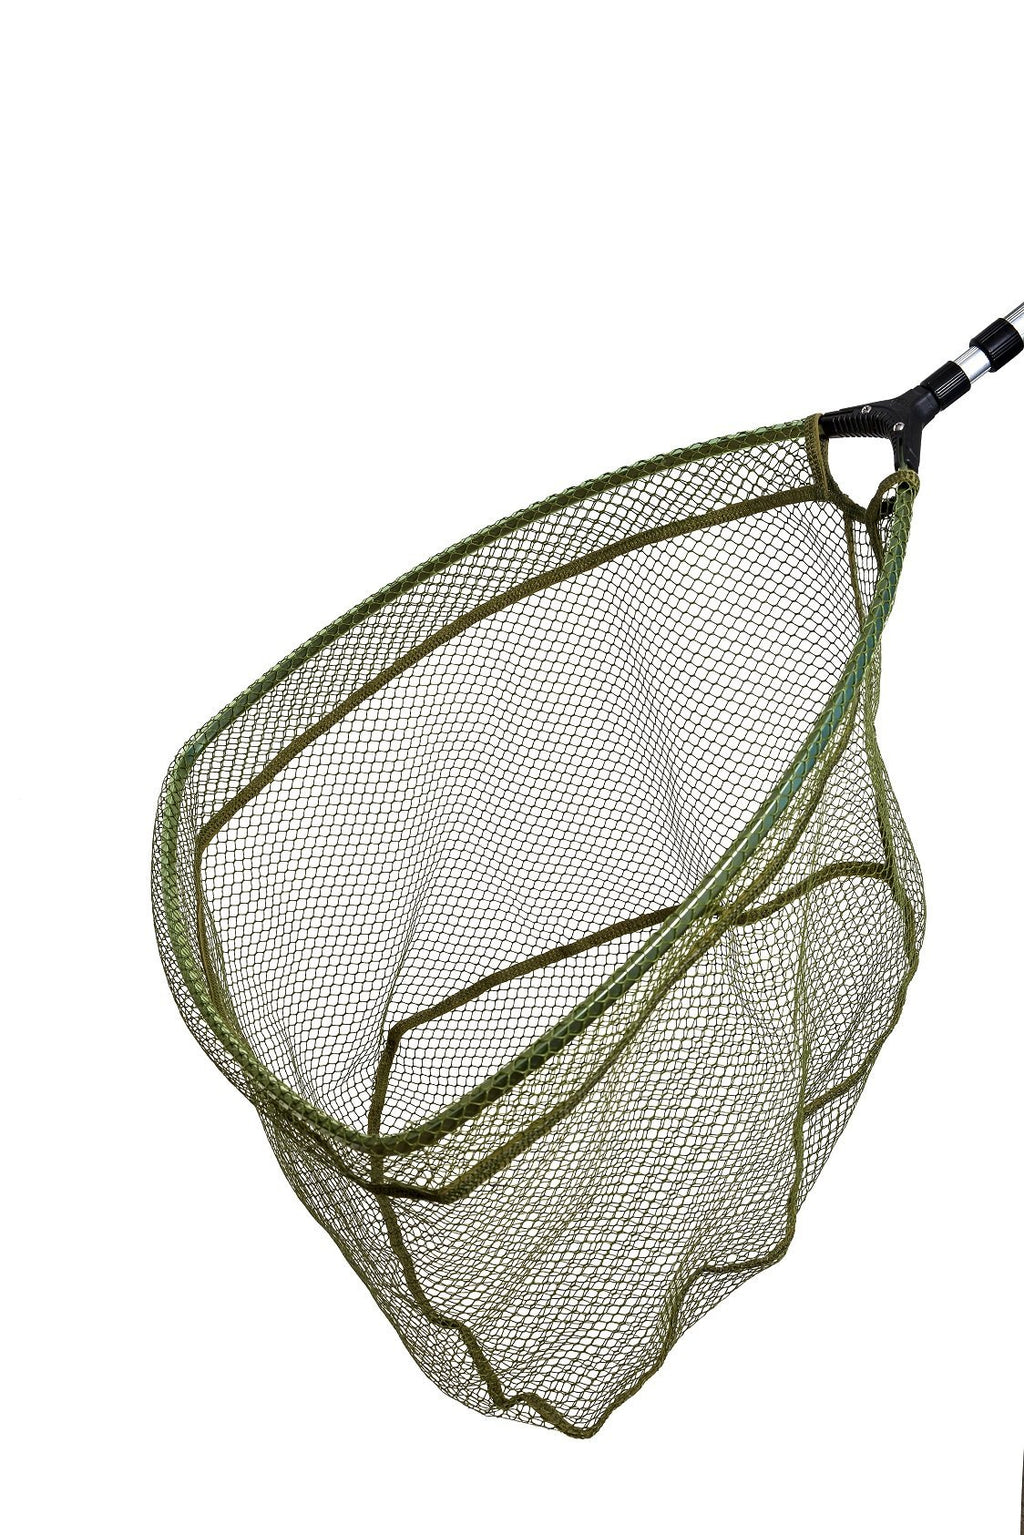  Heavy-Duty Polyethylene Fishing Net with Floats ~10